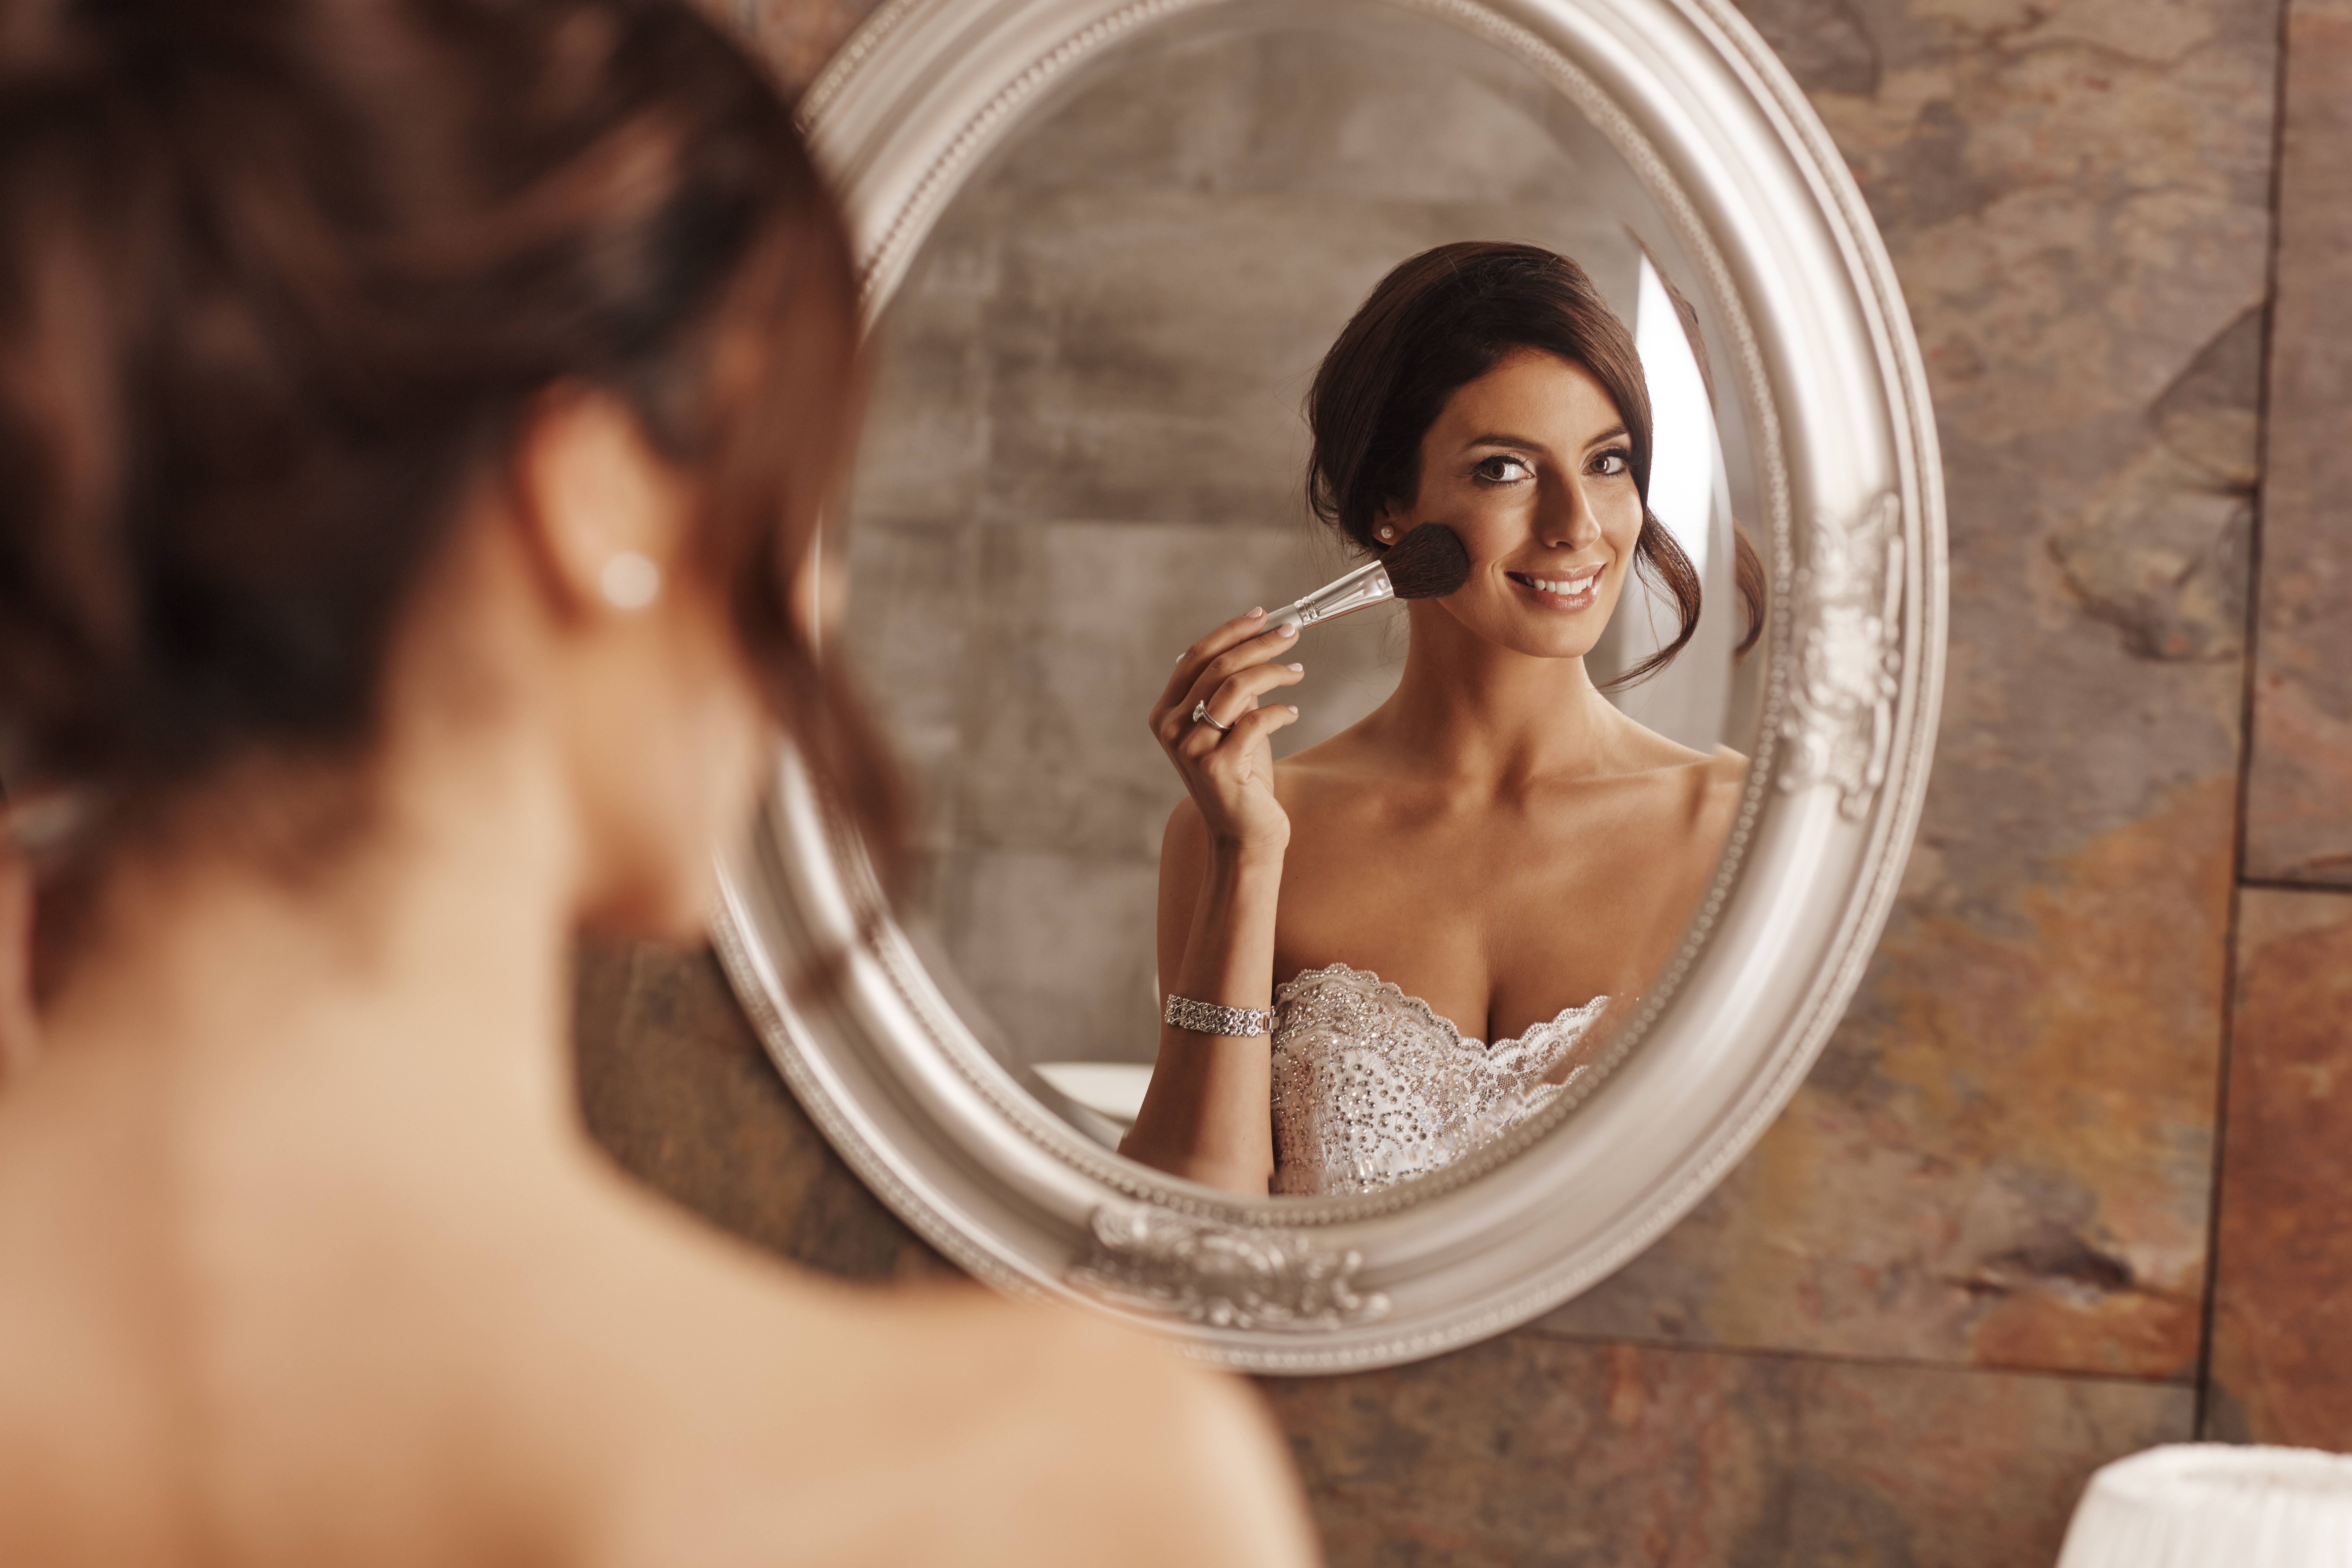 Une jeune mariée en train de se maquiller | Source : Shutterstock